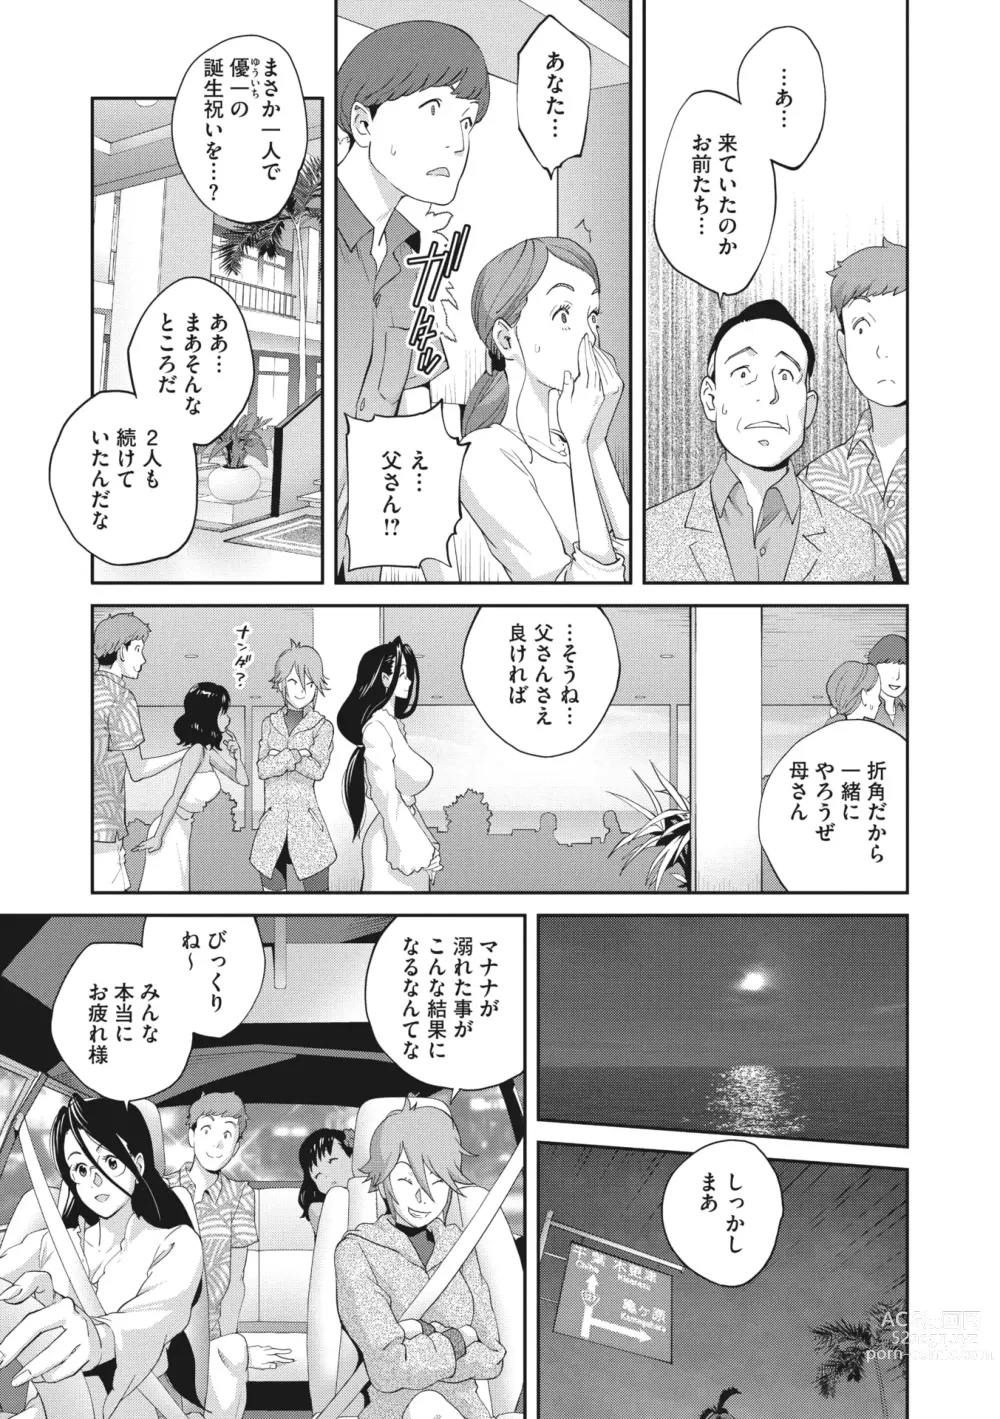 Page 79 of manga Kimama Tawawa Manana 1-4